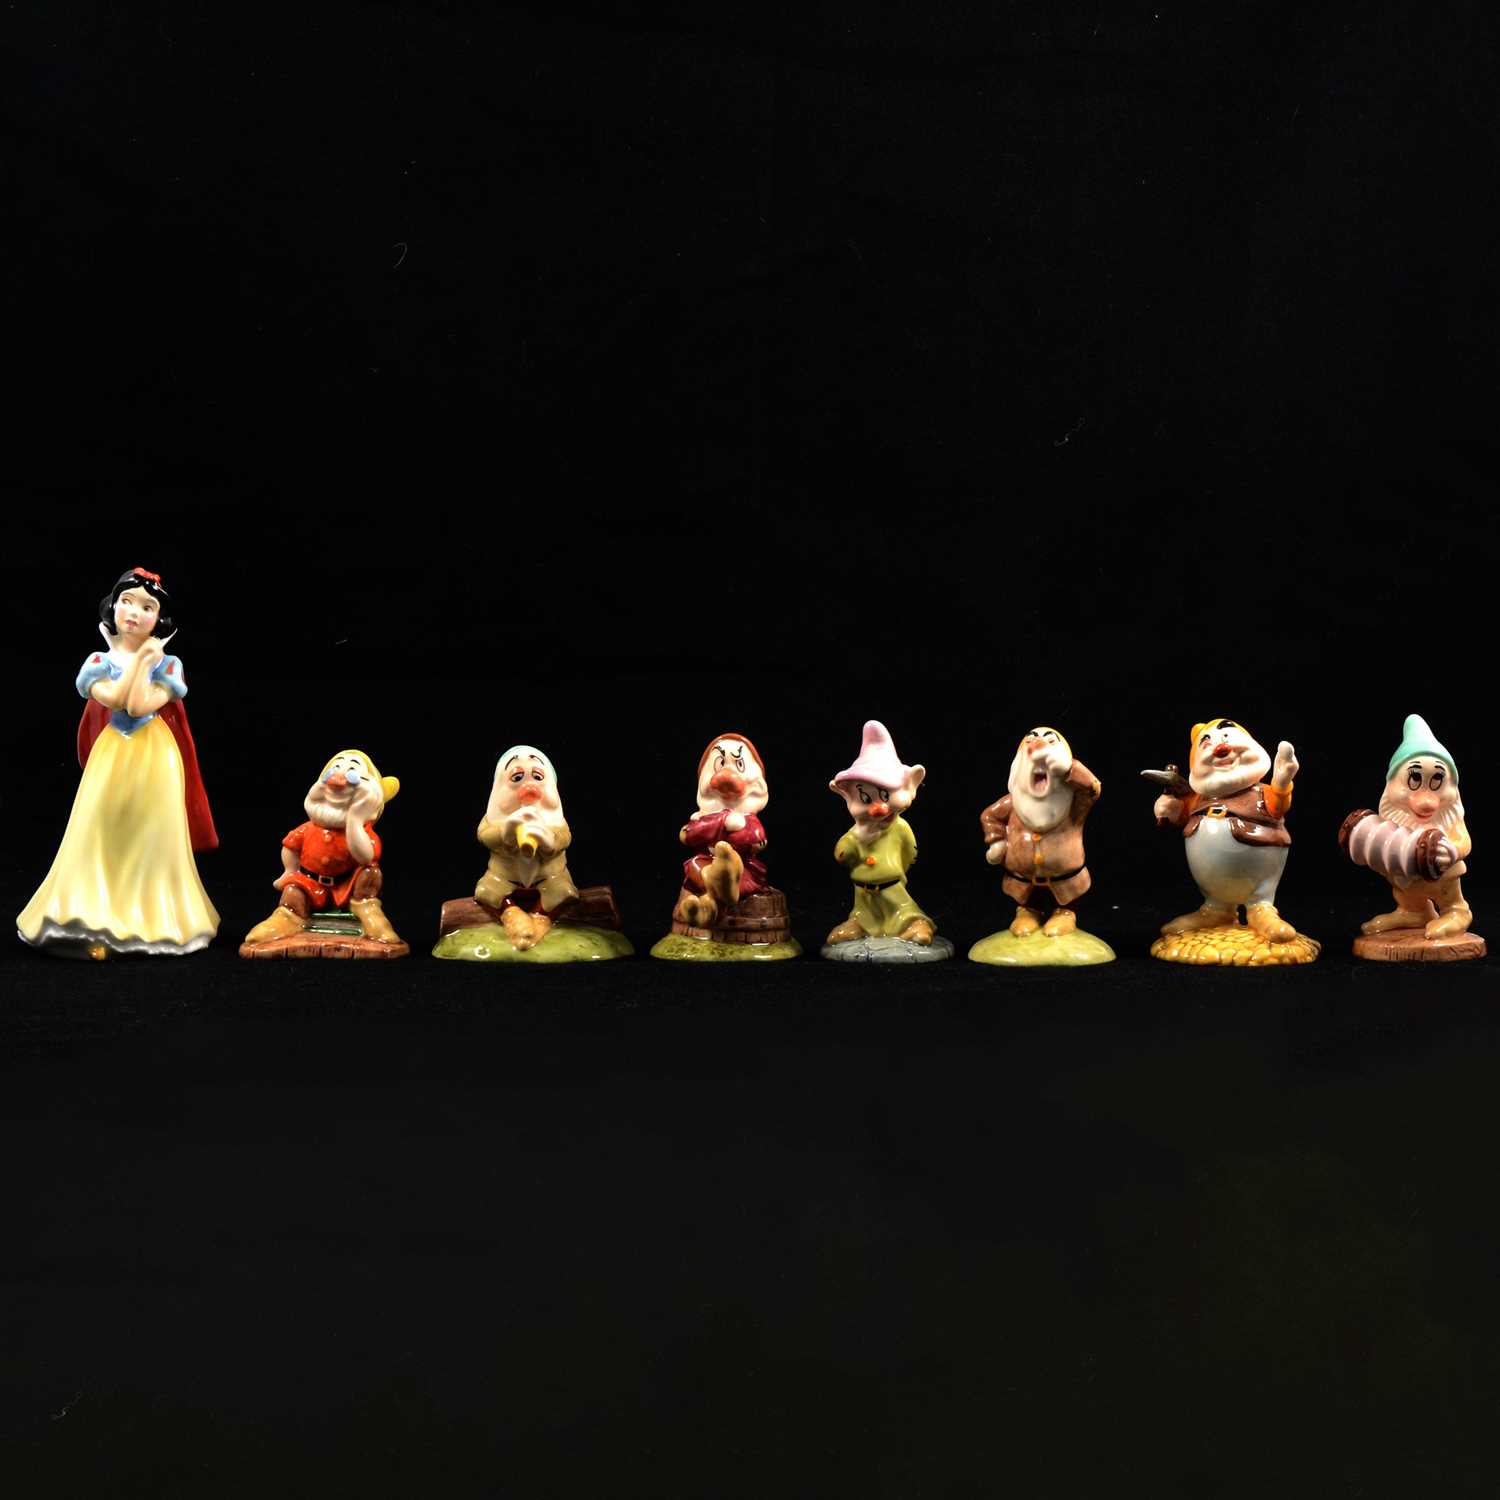 Lot 5 - Royal Doulton - Snow White and the Seven Dwarfs series